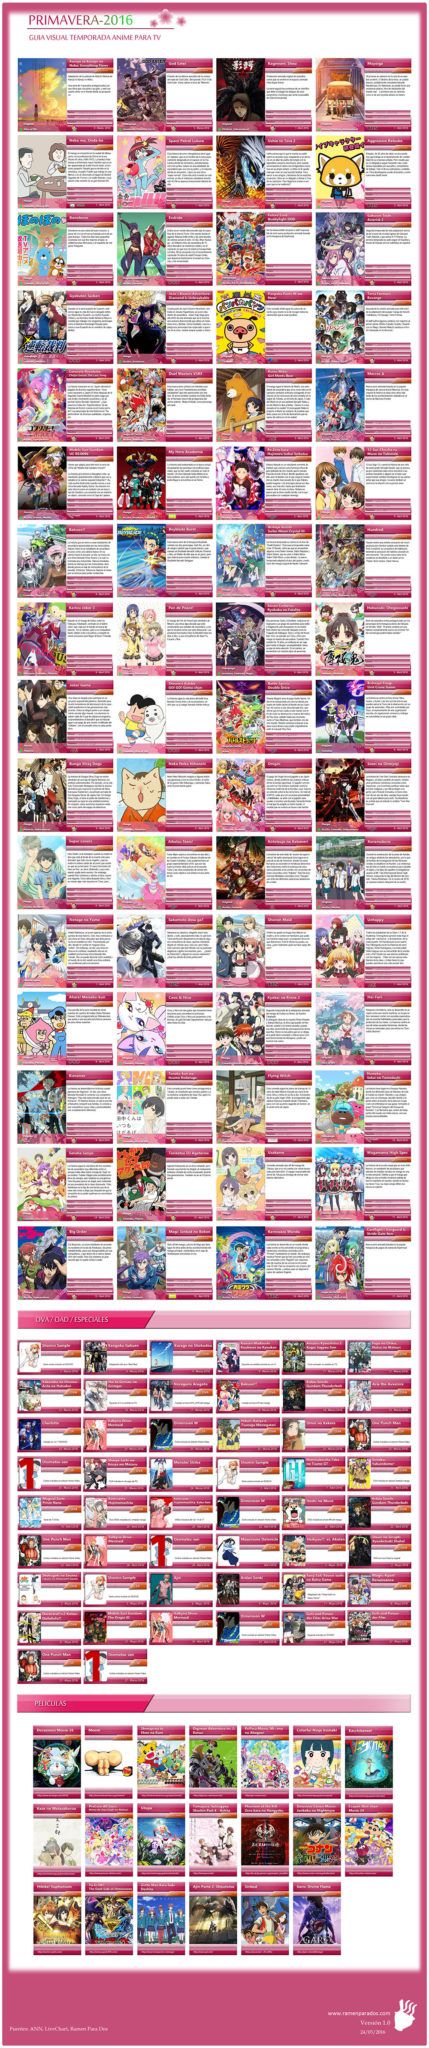 Guia Visual Anime Primavera16 slim v1_1